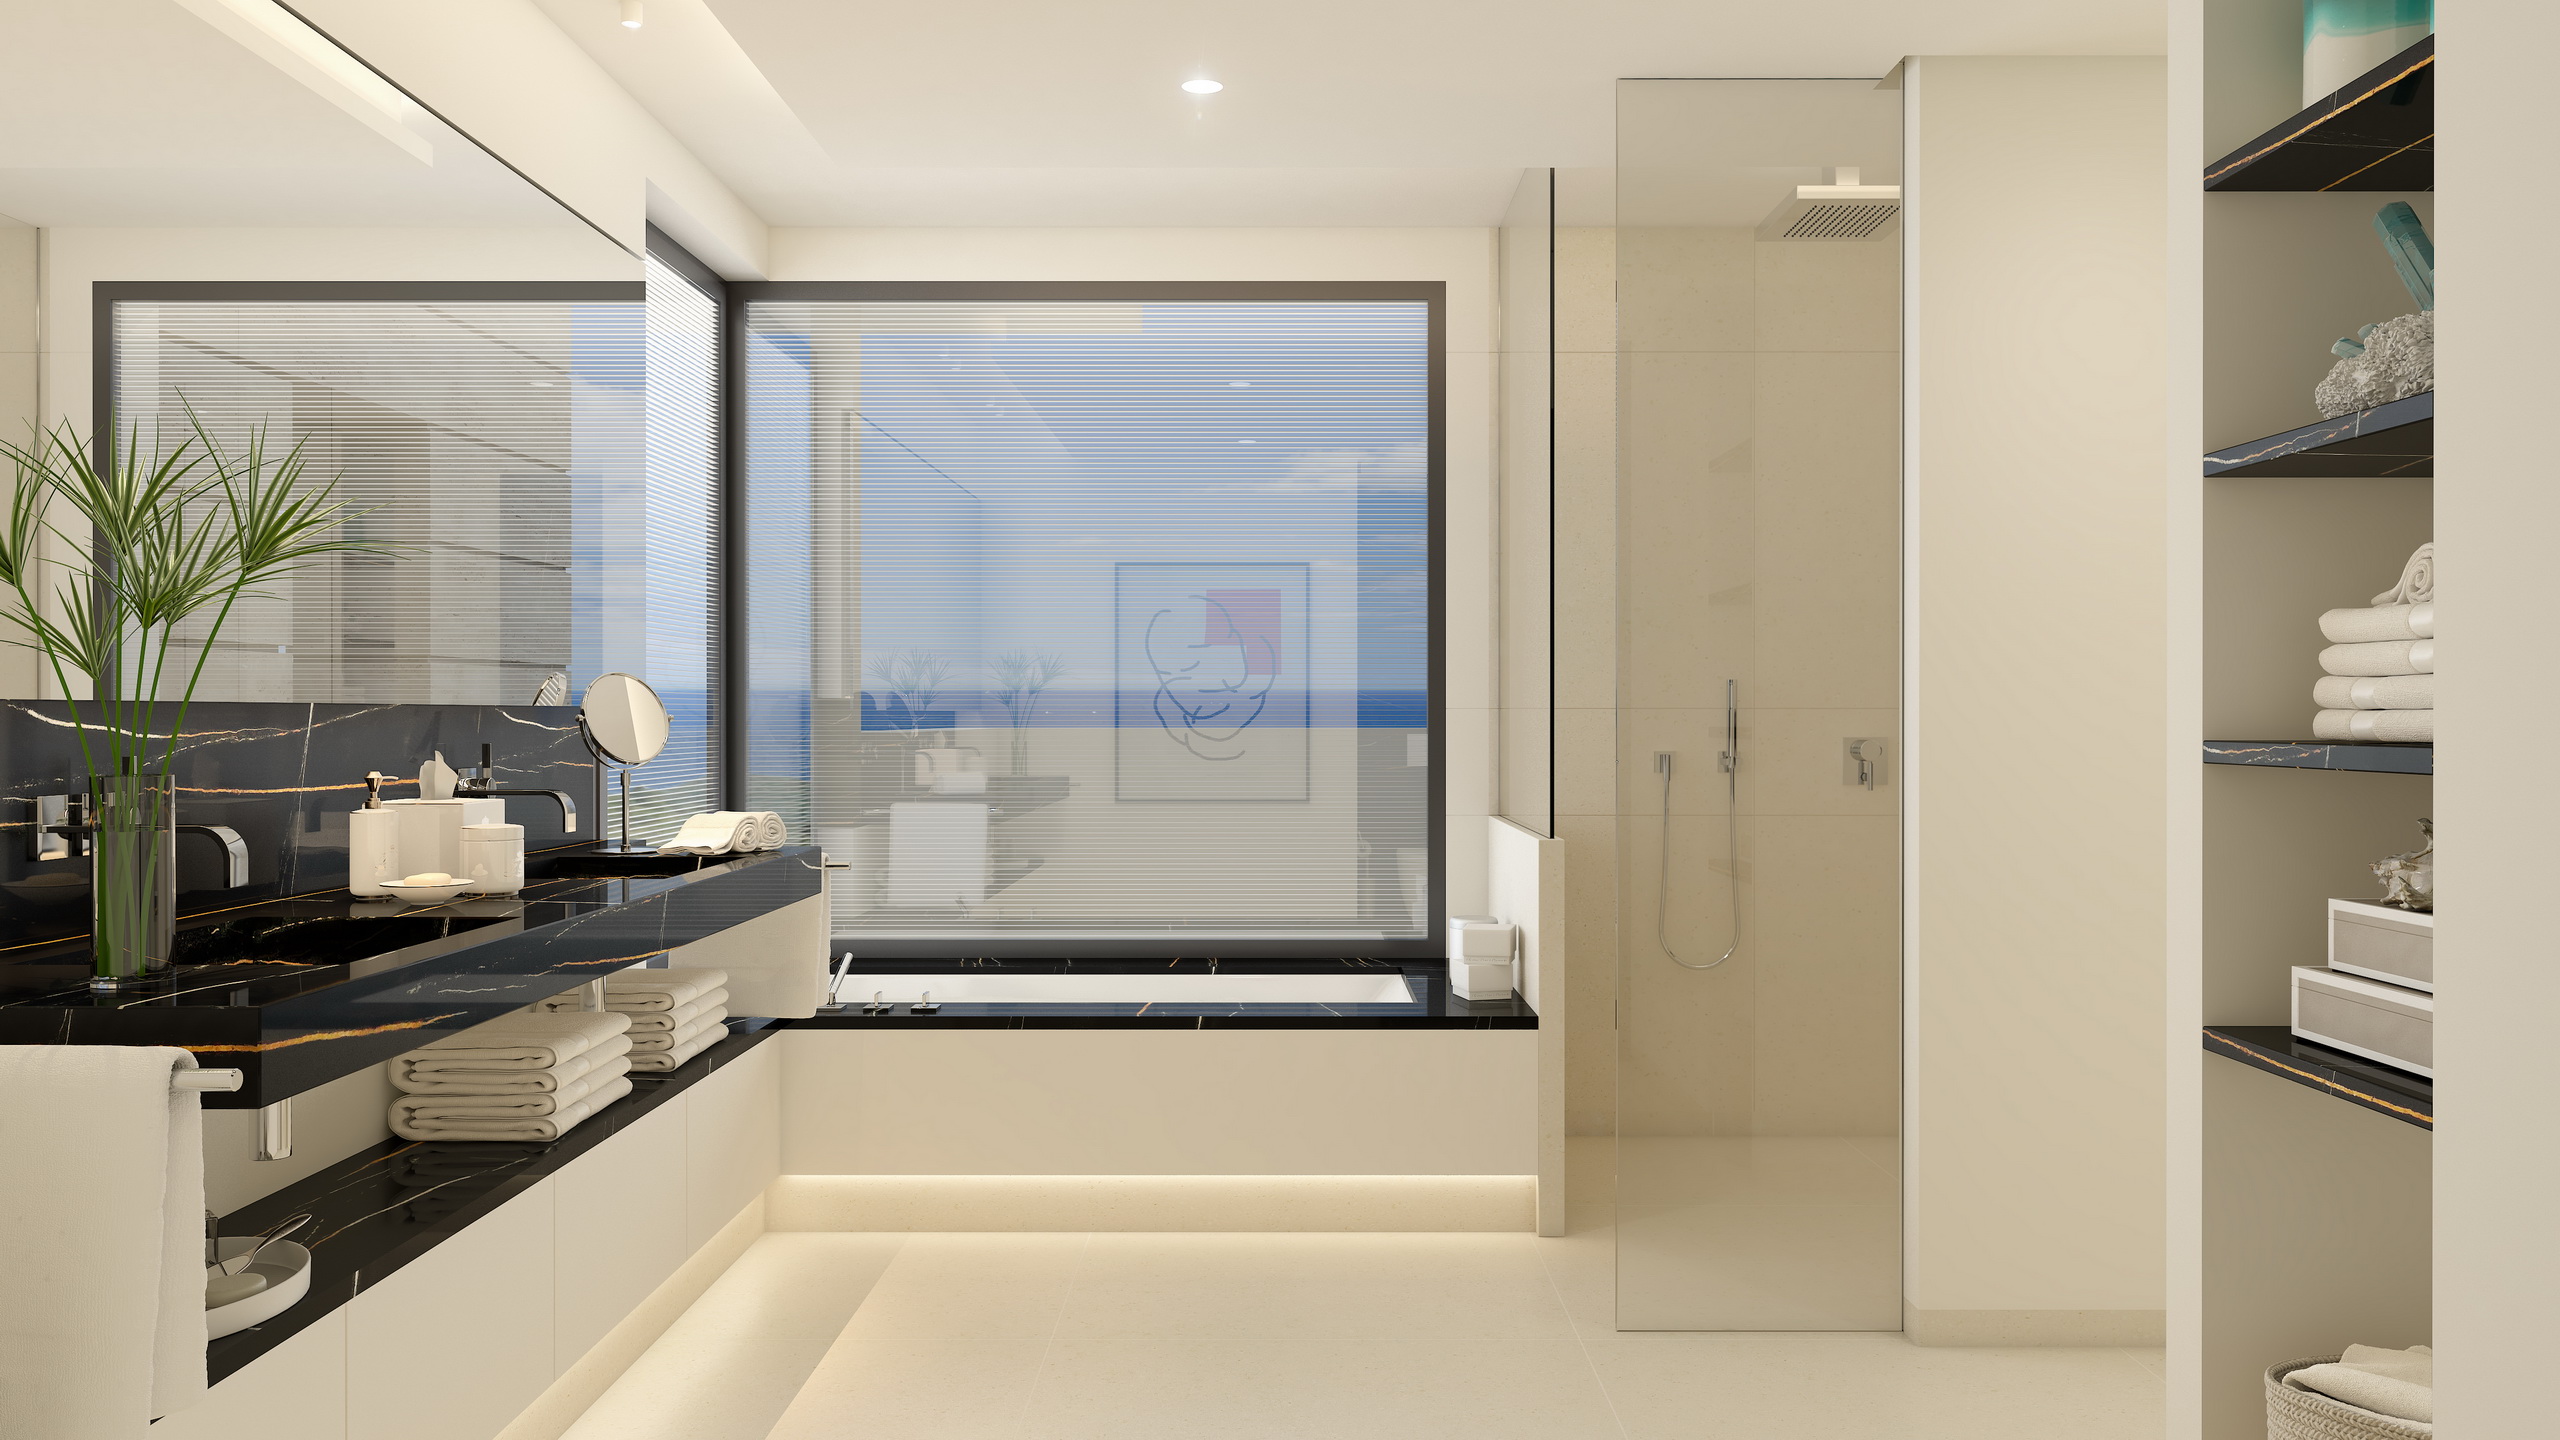 Desalentar Provisional foso Bañera o ducha? Consejos para reformar tu baño | Pedro Peña Interior Design